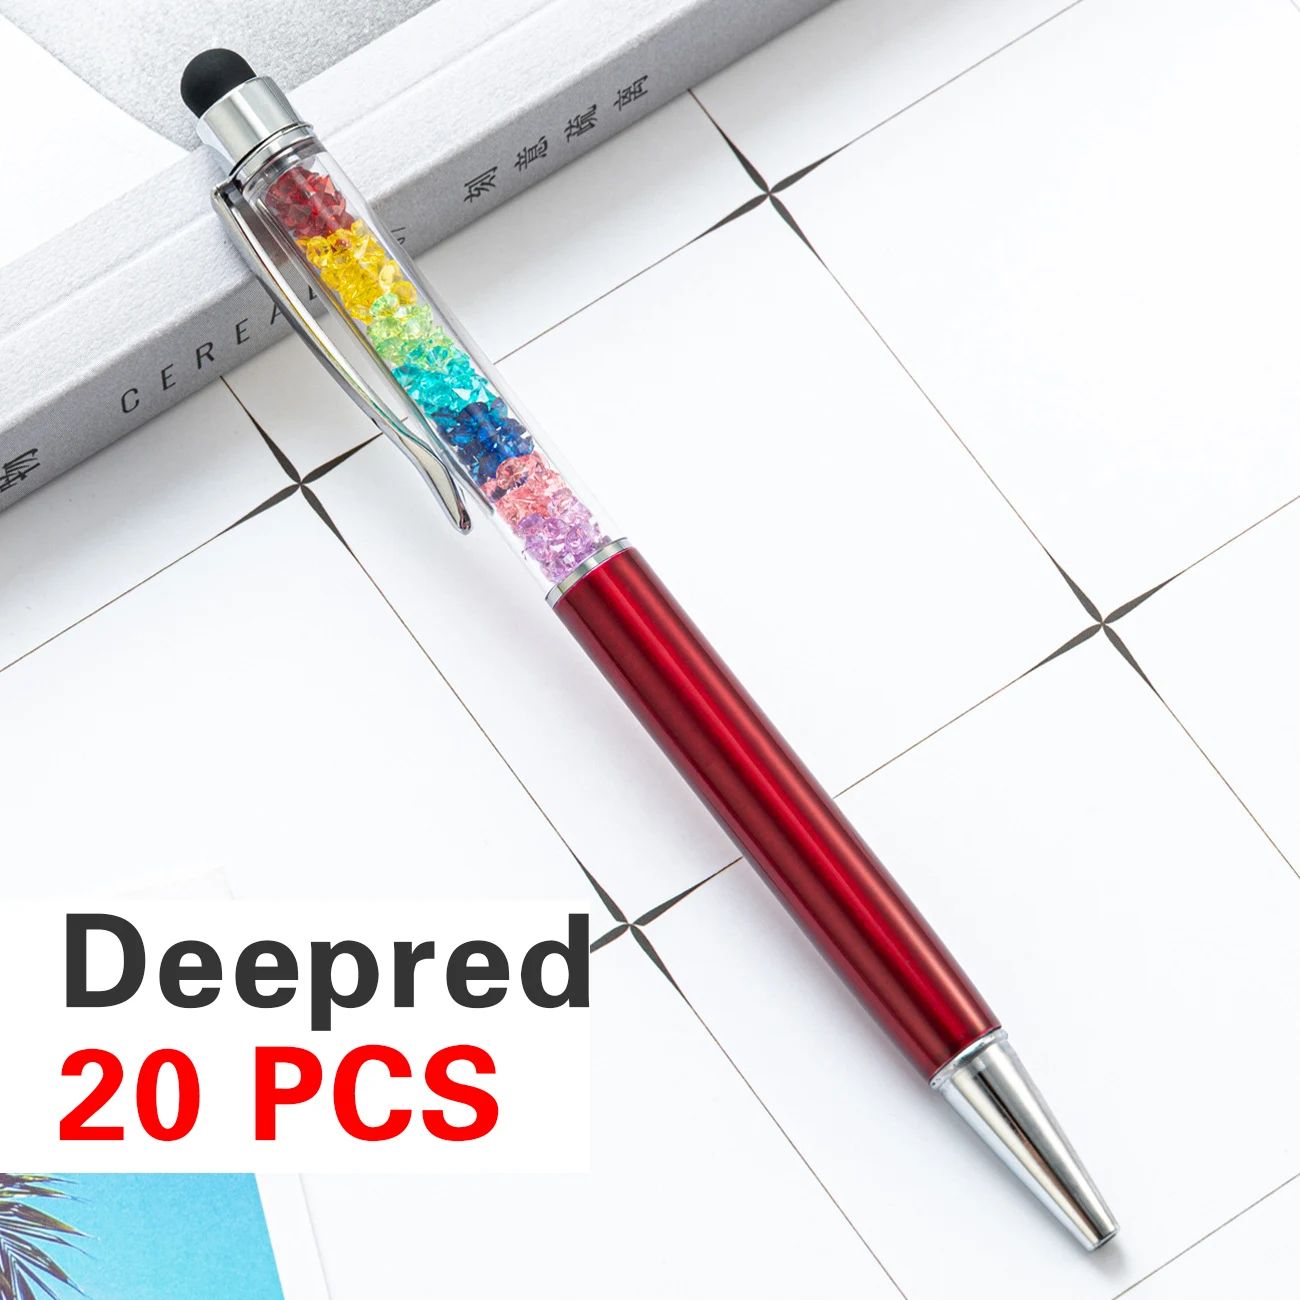 Kleur: depred - 20 pennen